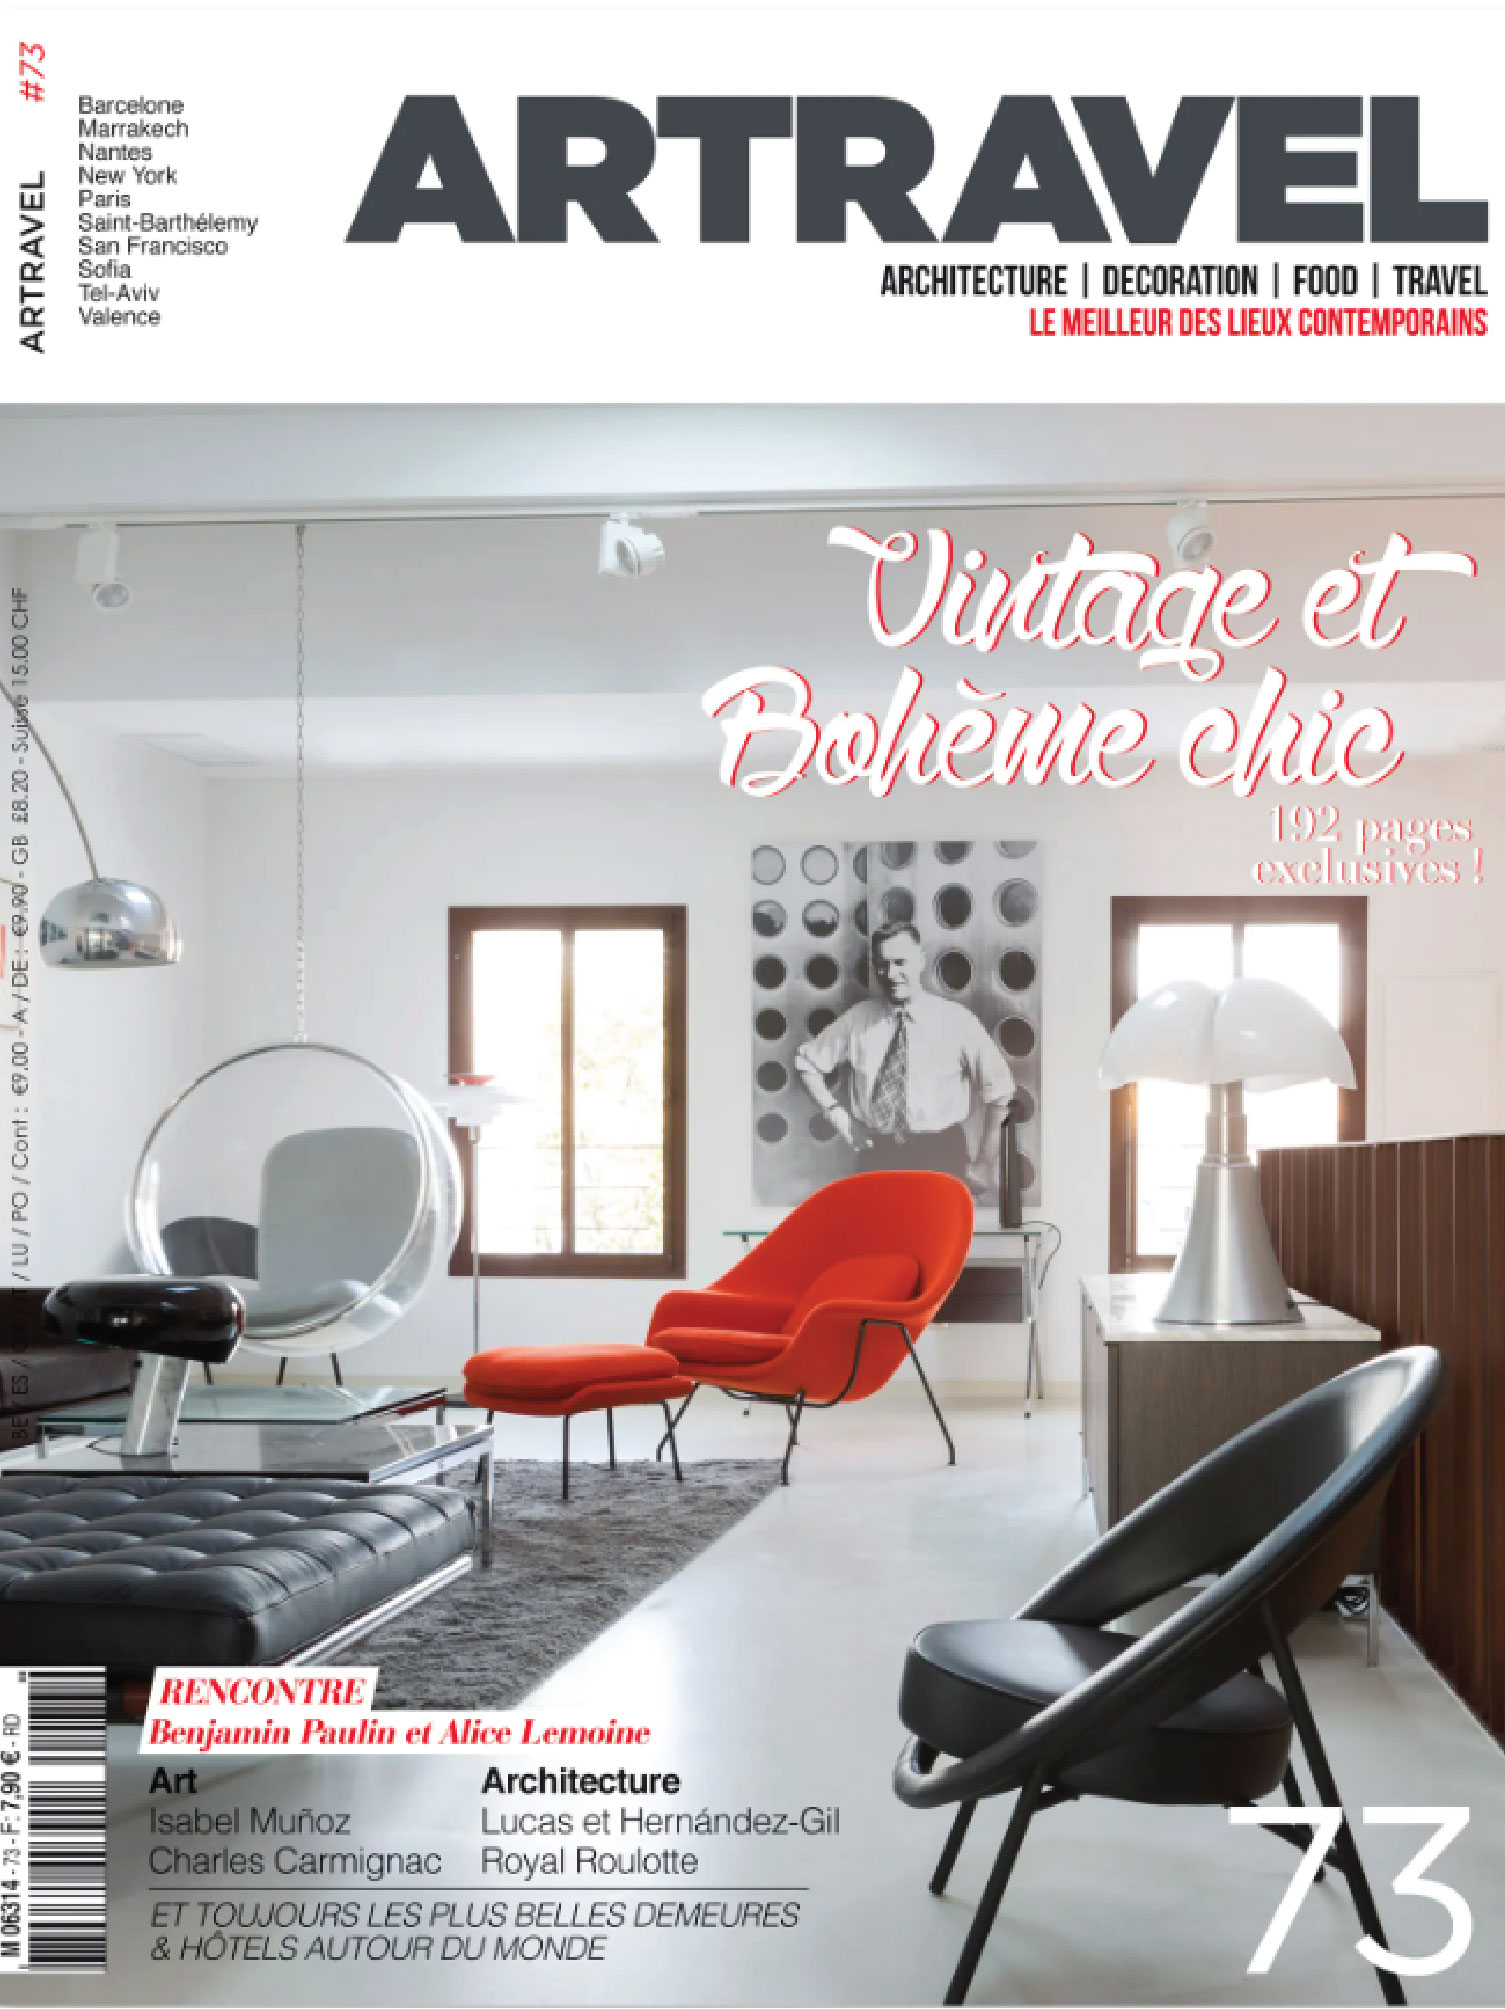 cover of the magazine artravel february 2017